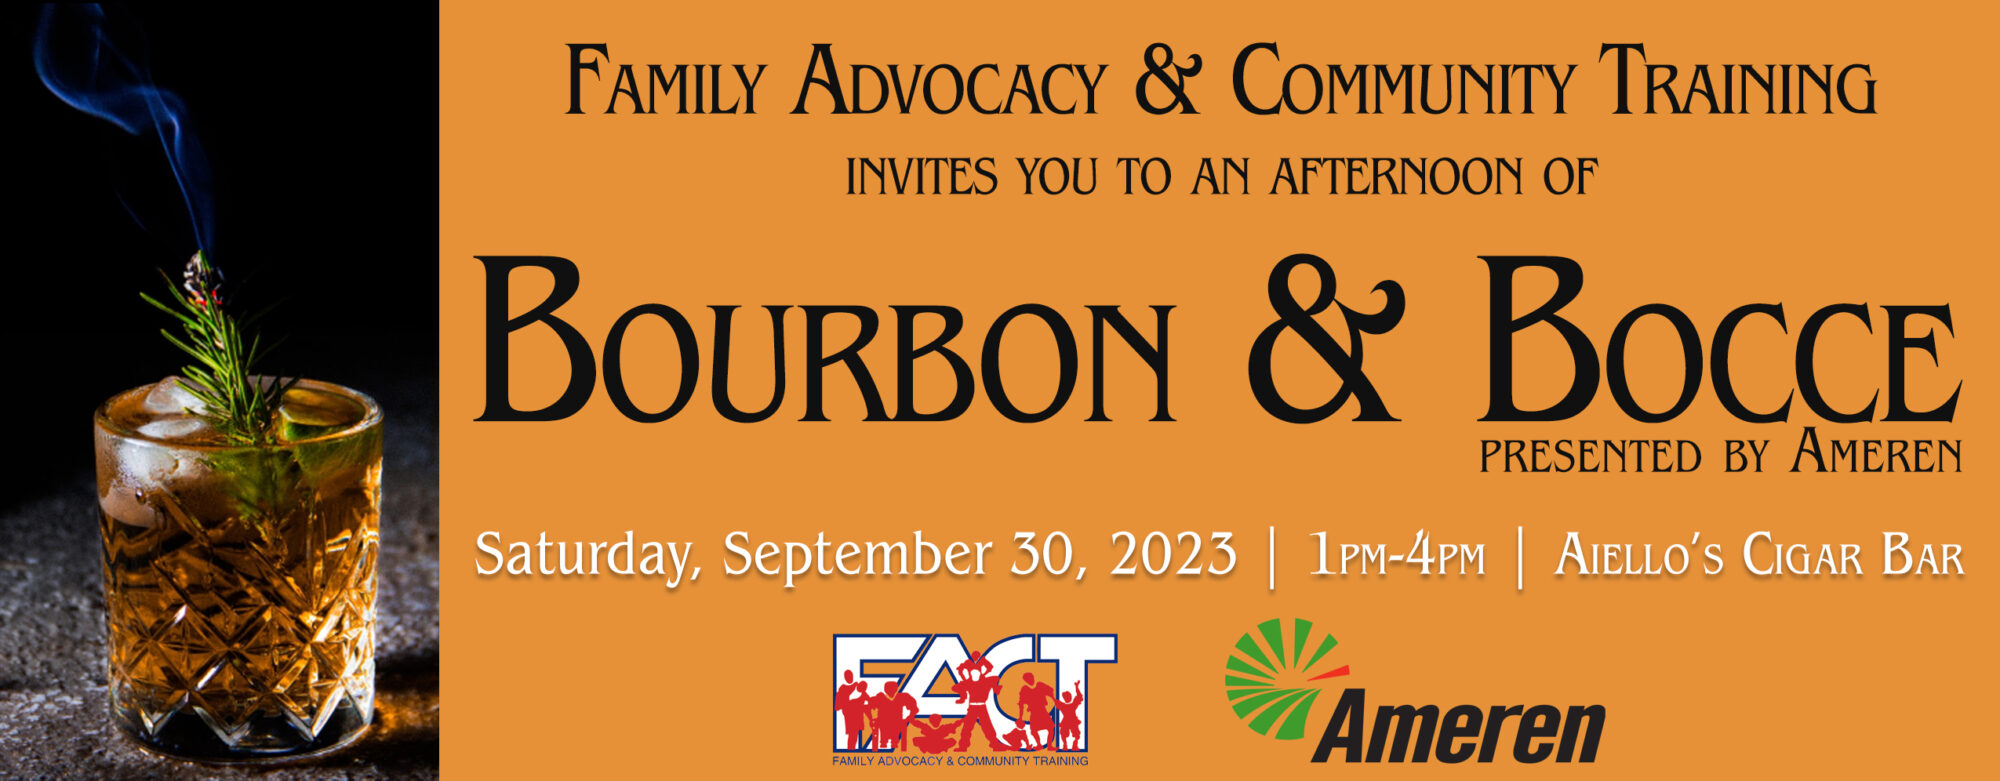 Bourbon & Bocce Fundraising Event Sept. 30 2023